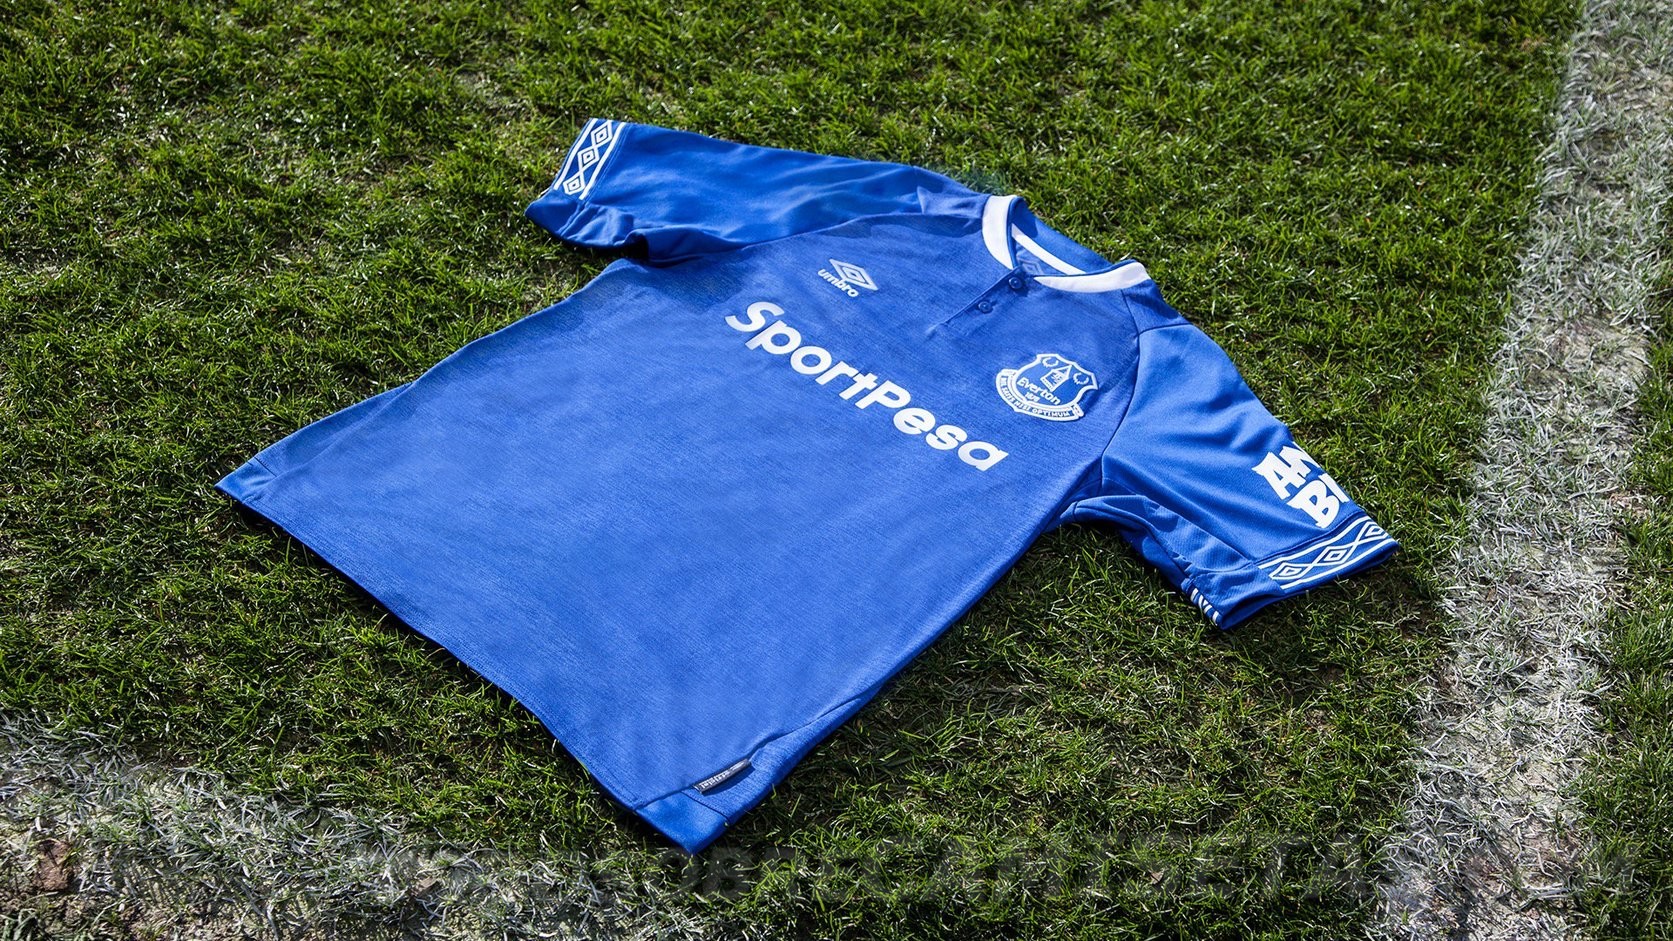 Everton FC Umbro Home Kit 2018-19